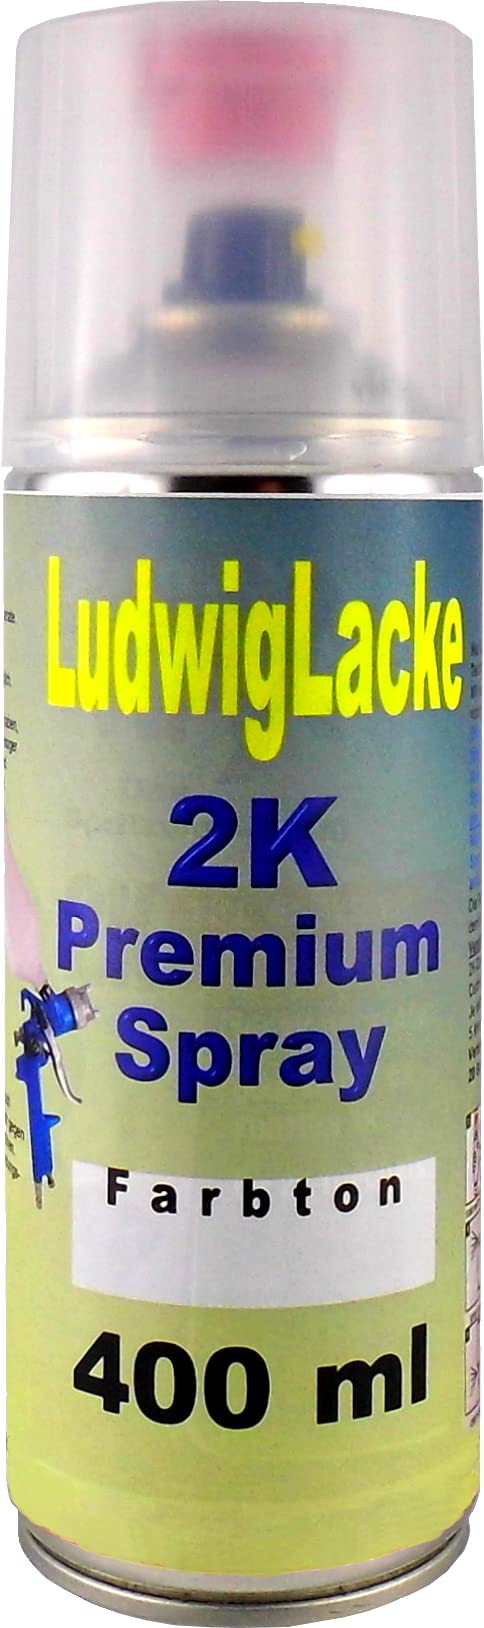 Ludwig Lacke RAL 7015 SCHIEFERGRAU 2K Premium Spray 400ml von Ludwiglacke